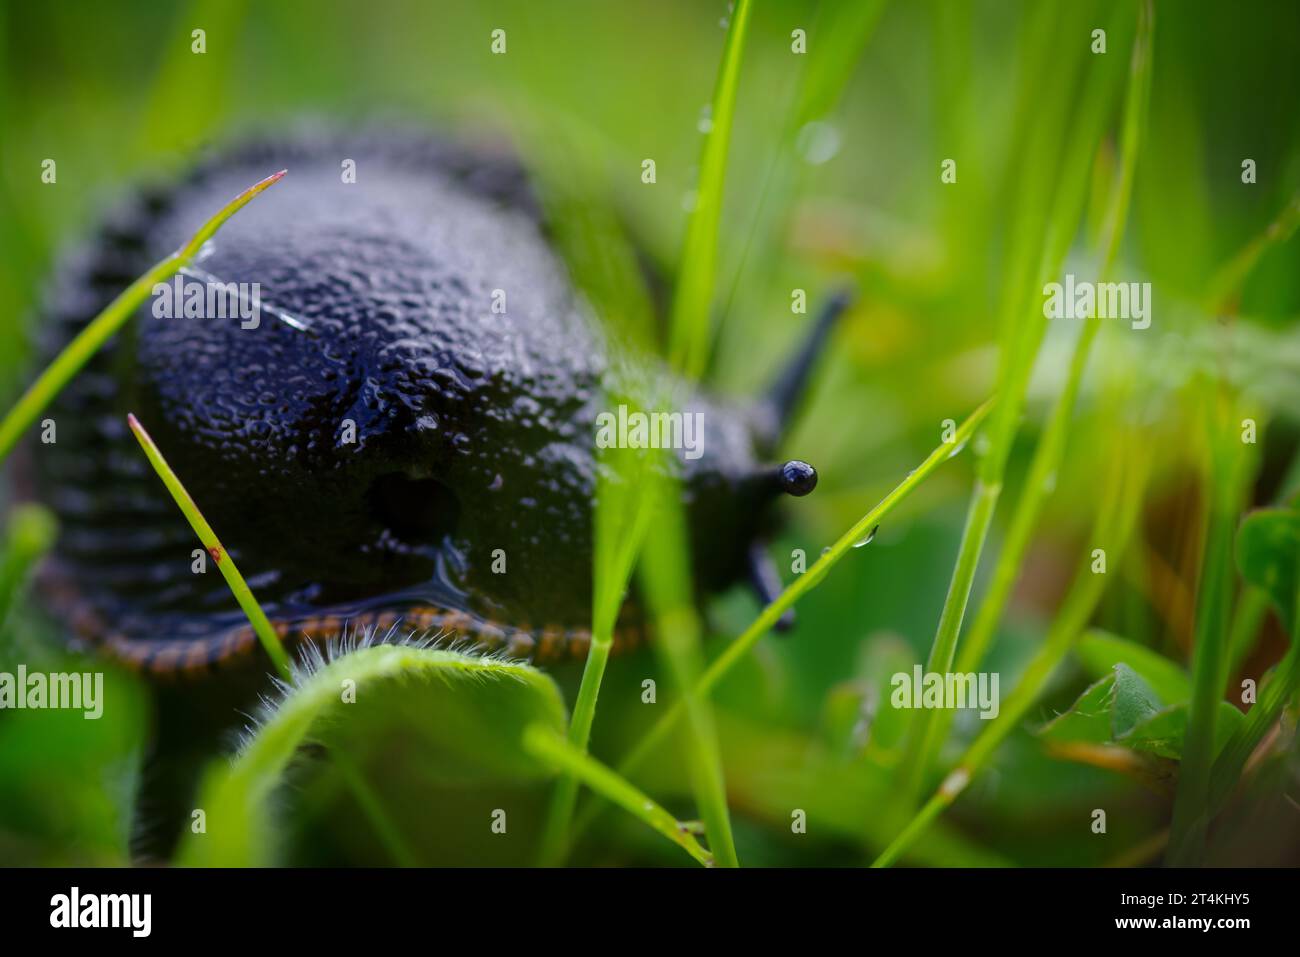 macro shot of a black snail Stock Photo